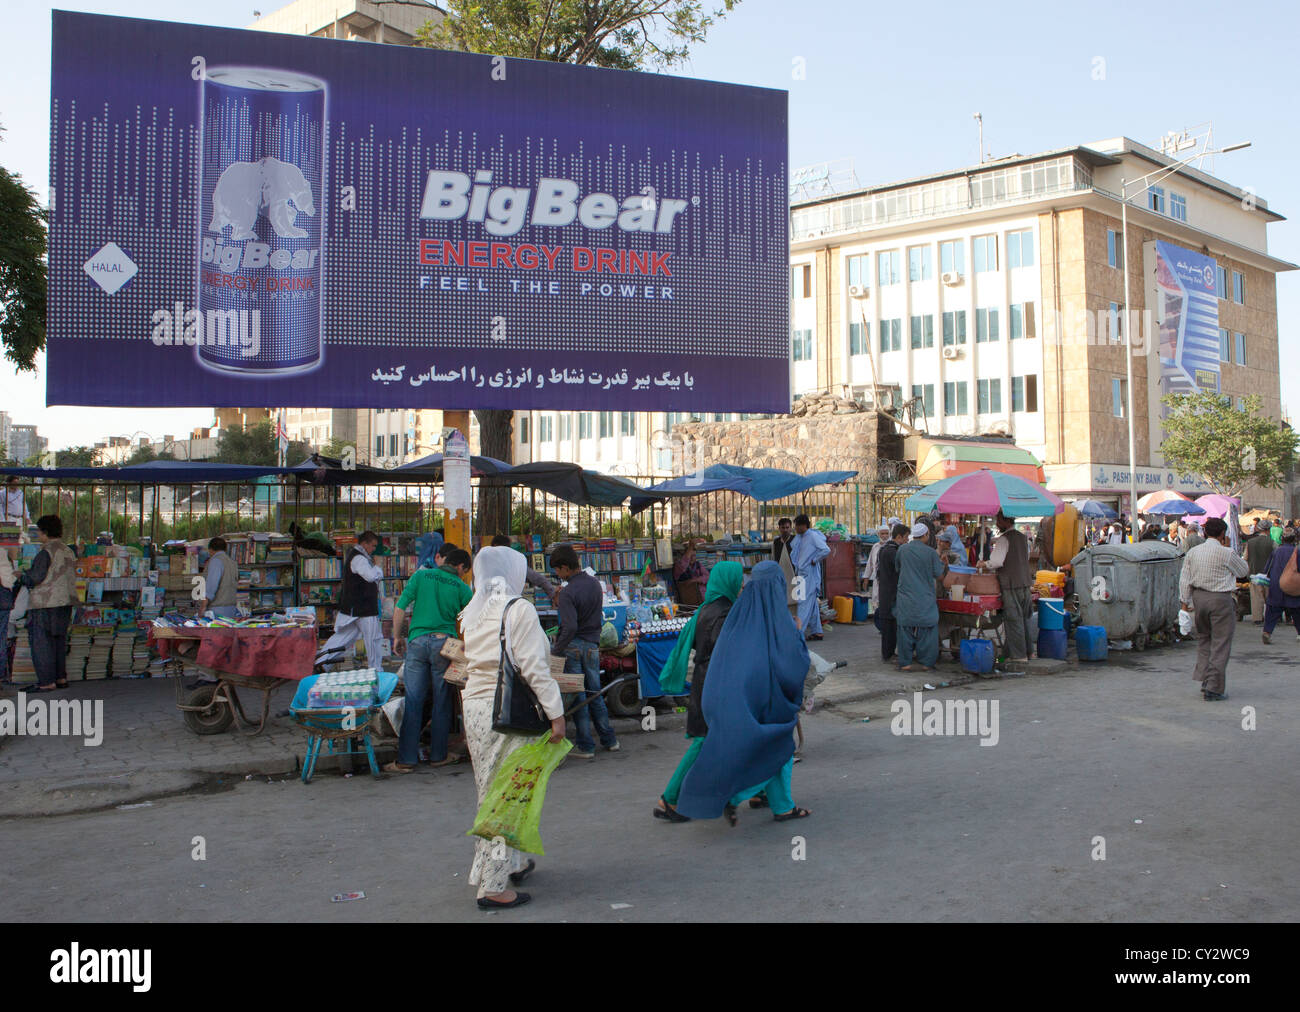 Annuncio di bevanda energetica a Kabul, Afghanistan Foto Stock